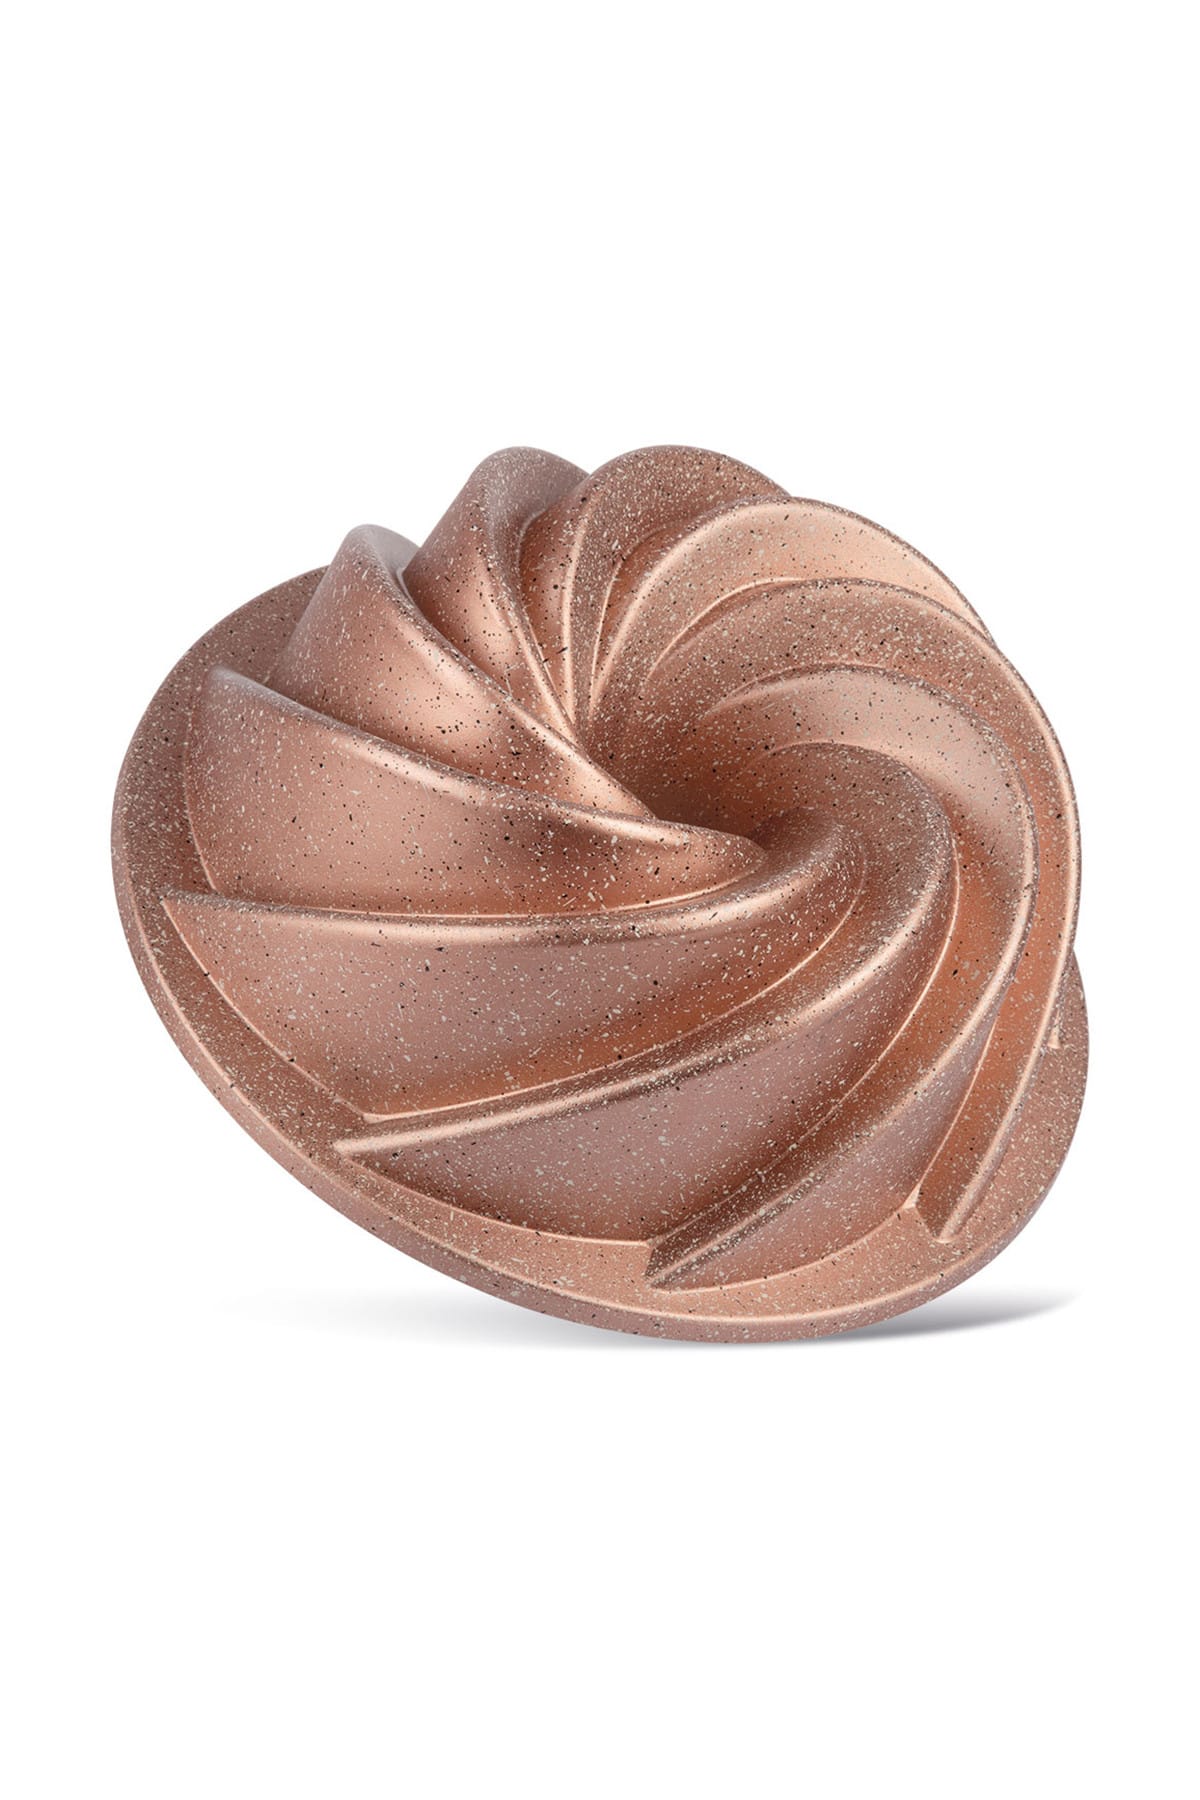 ThermoAD Rüzgar Gülü Granit Kek Kalıbı Rose Gold